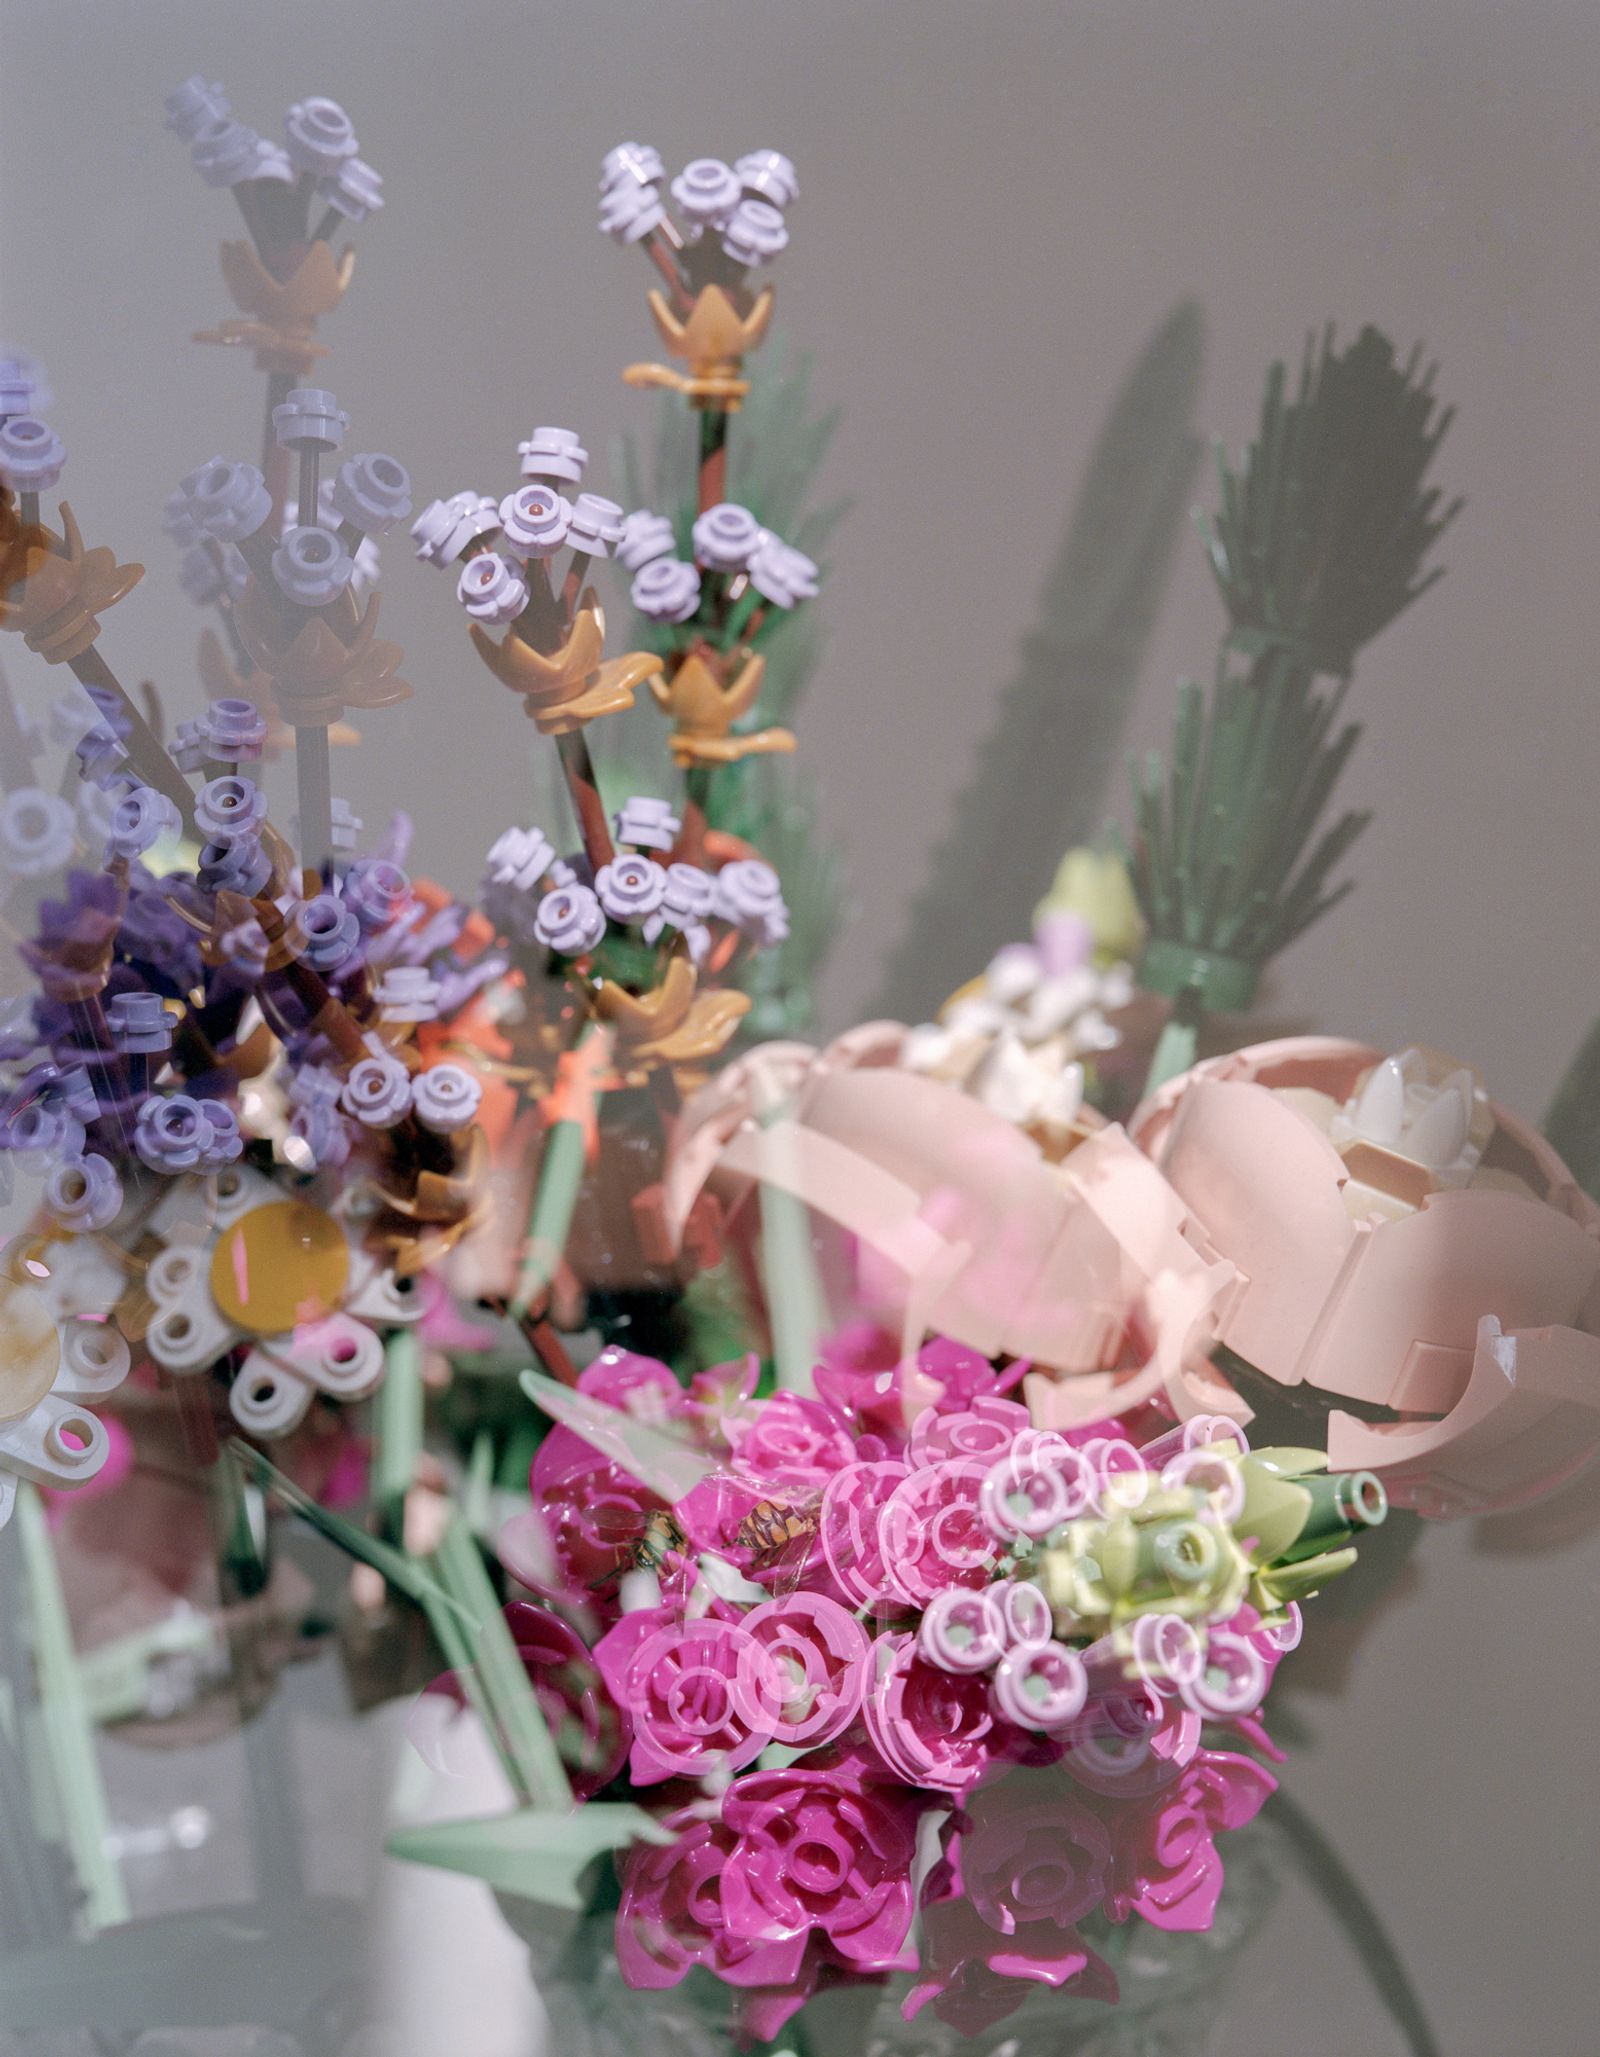 © Cinzia Romanin - Eternal petro-flowers / Eterni petro-fiori